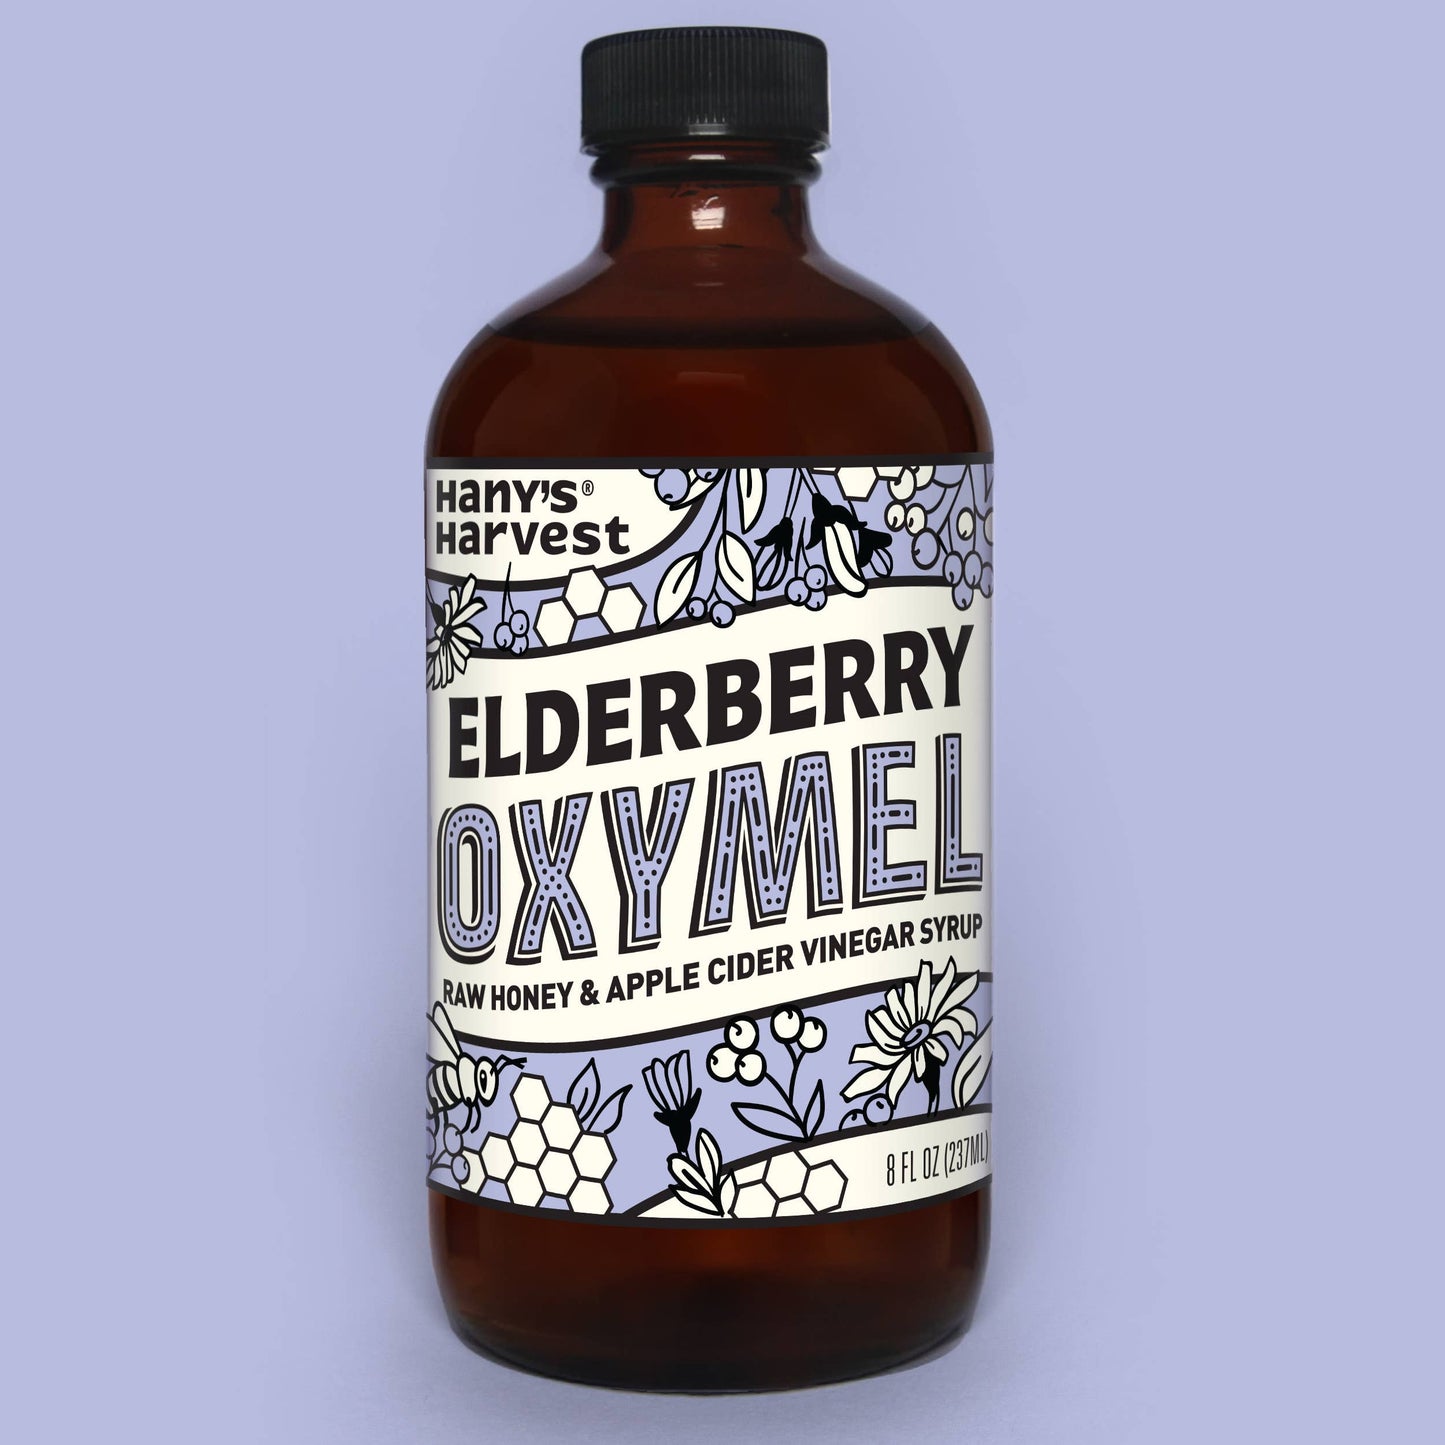 Elderberry Oxymel Syrup